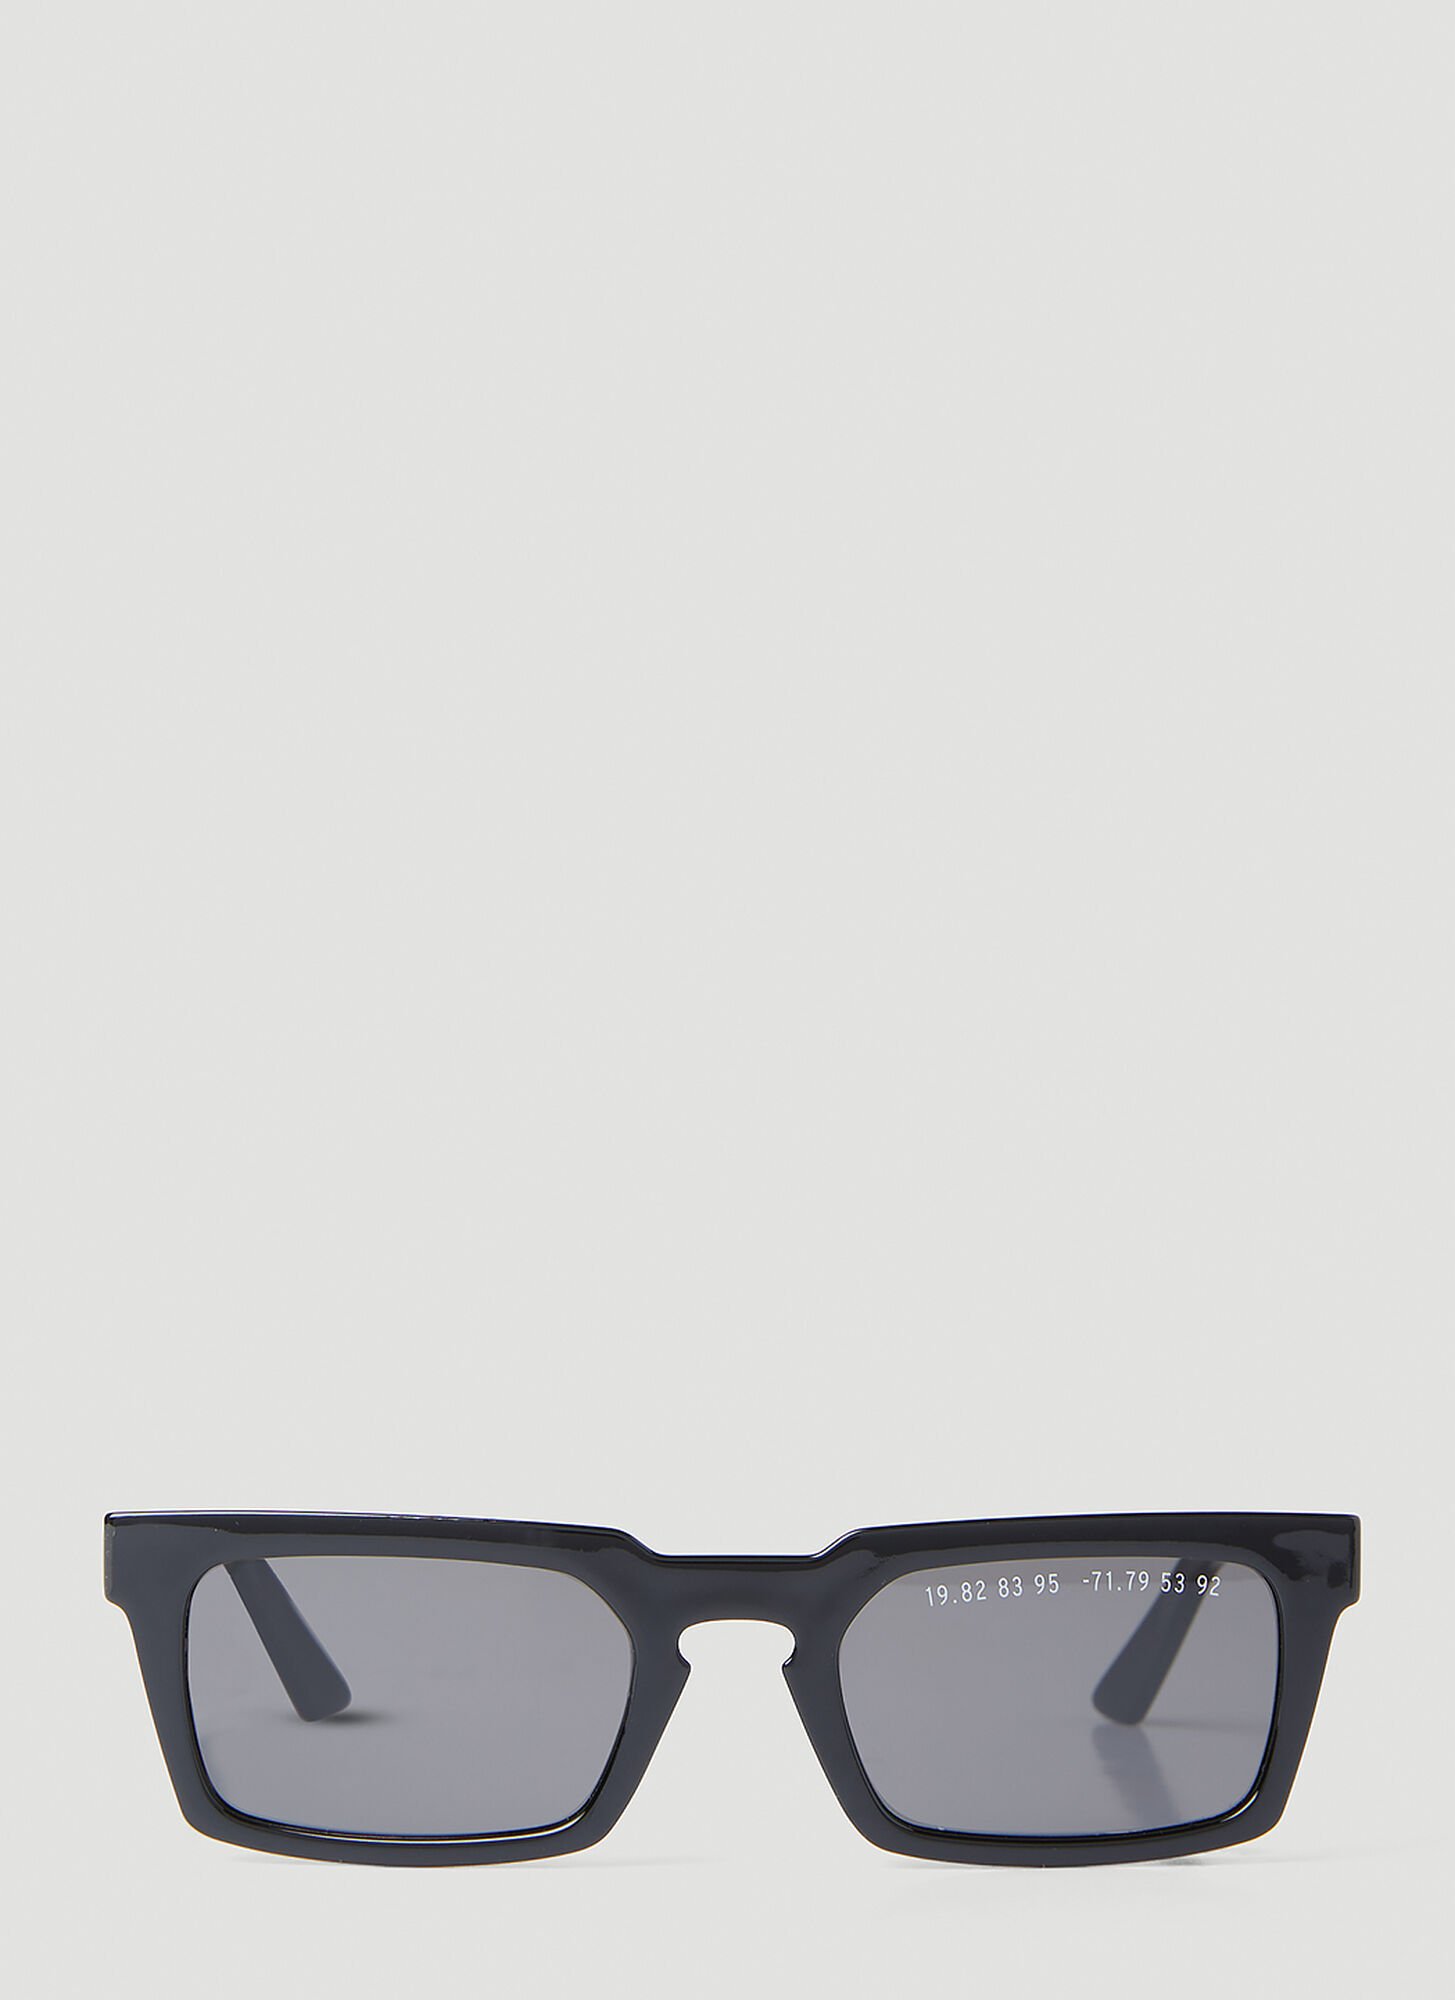 Clean Waves Type 2 Low Sunglasses Unisex Black